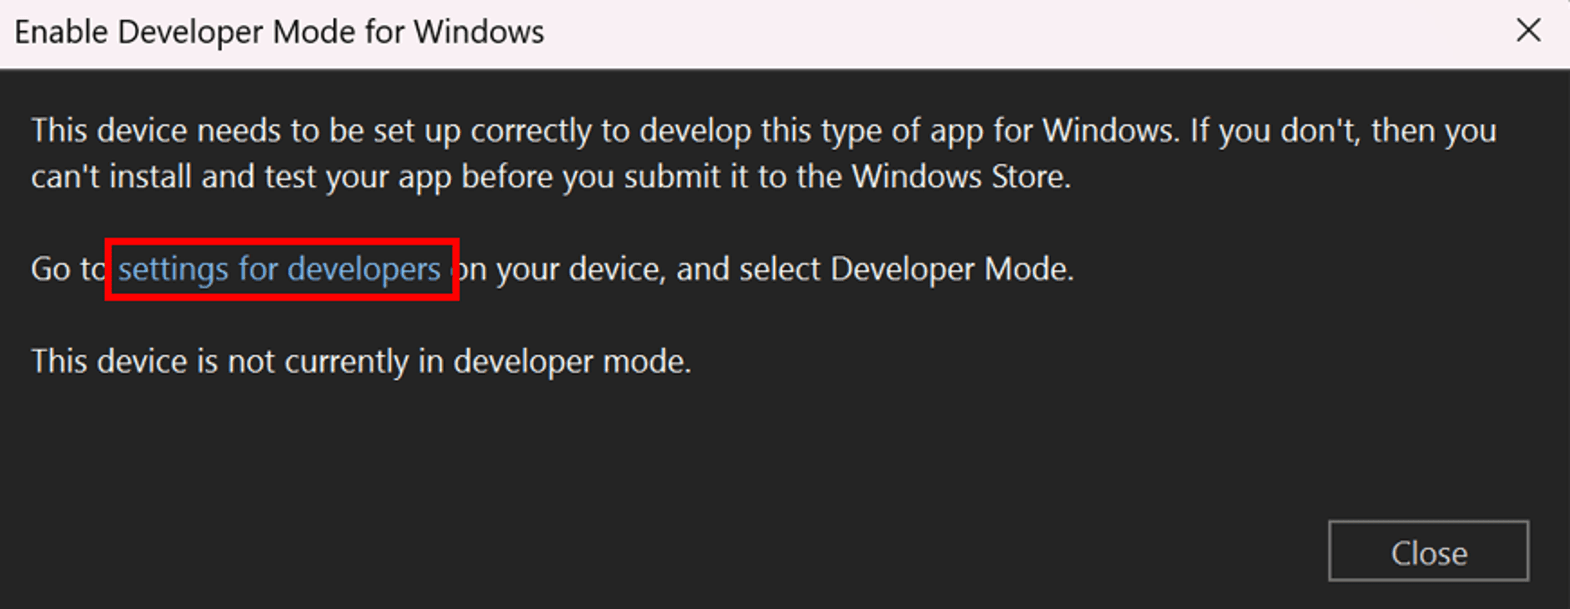 Windows용 개발자 모드 활성화 대화 상자.